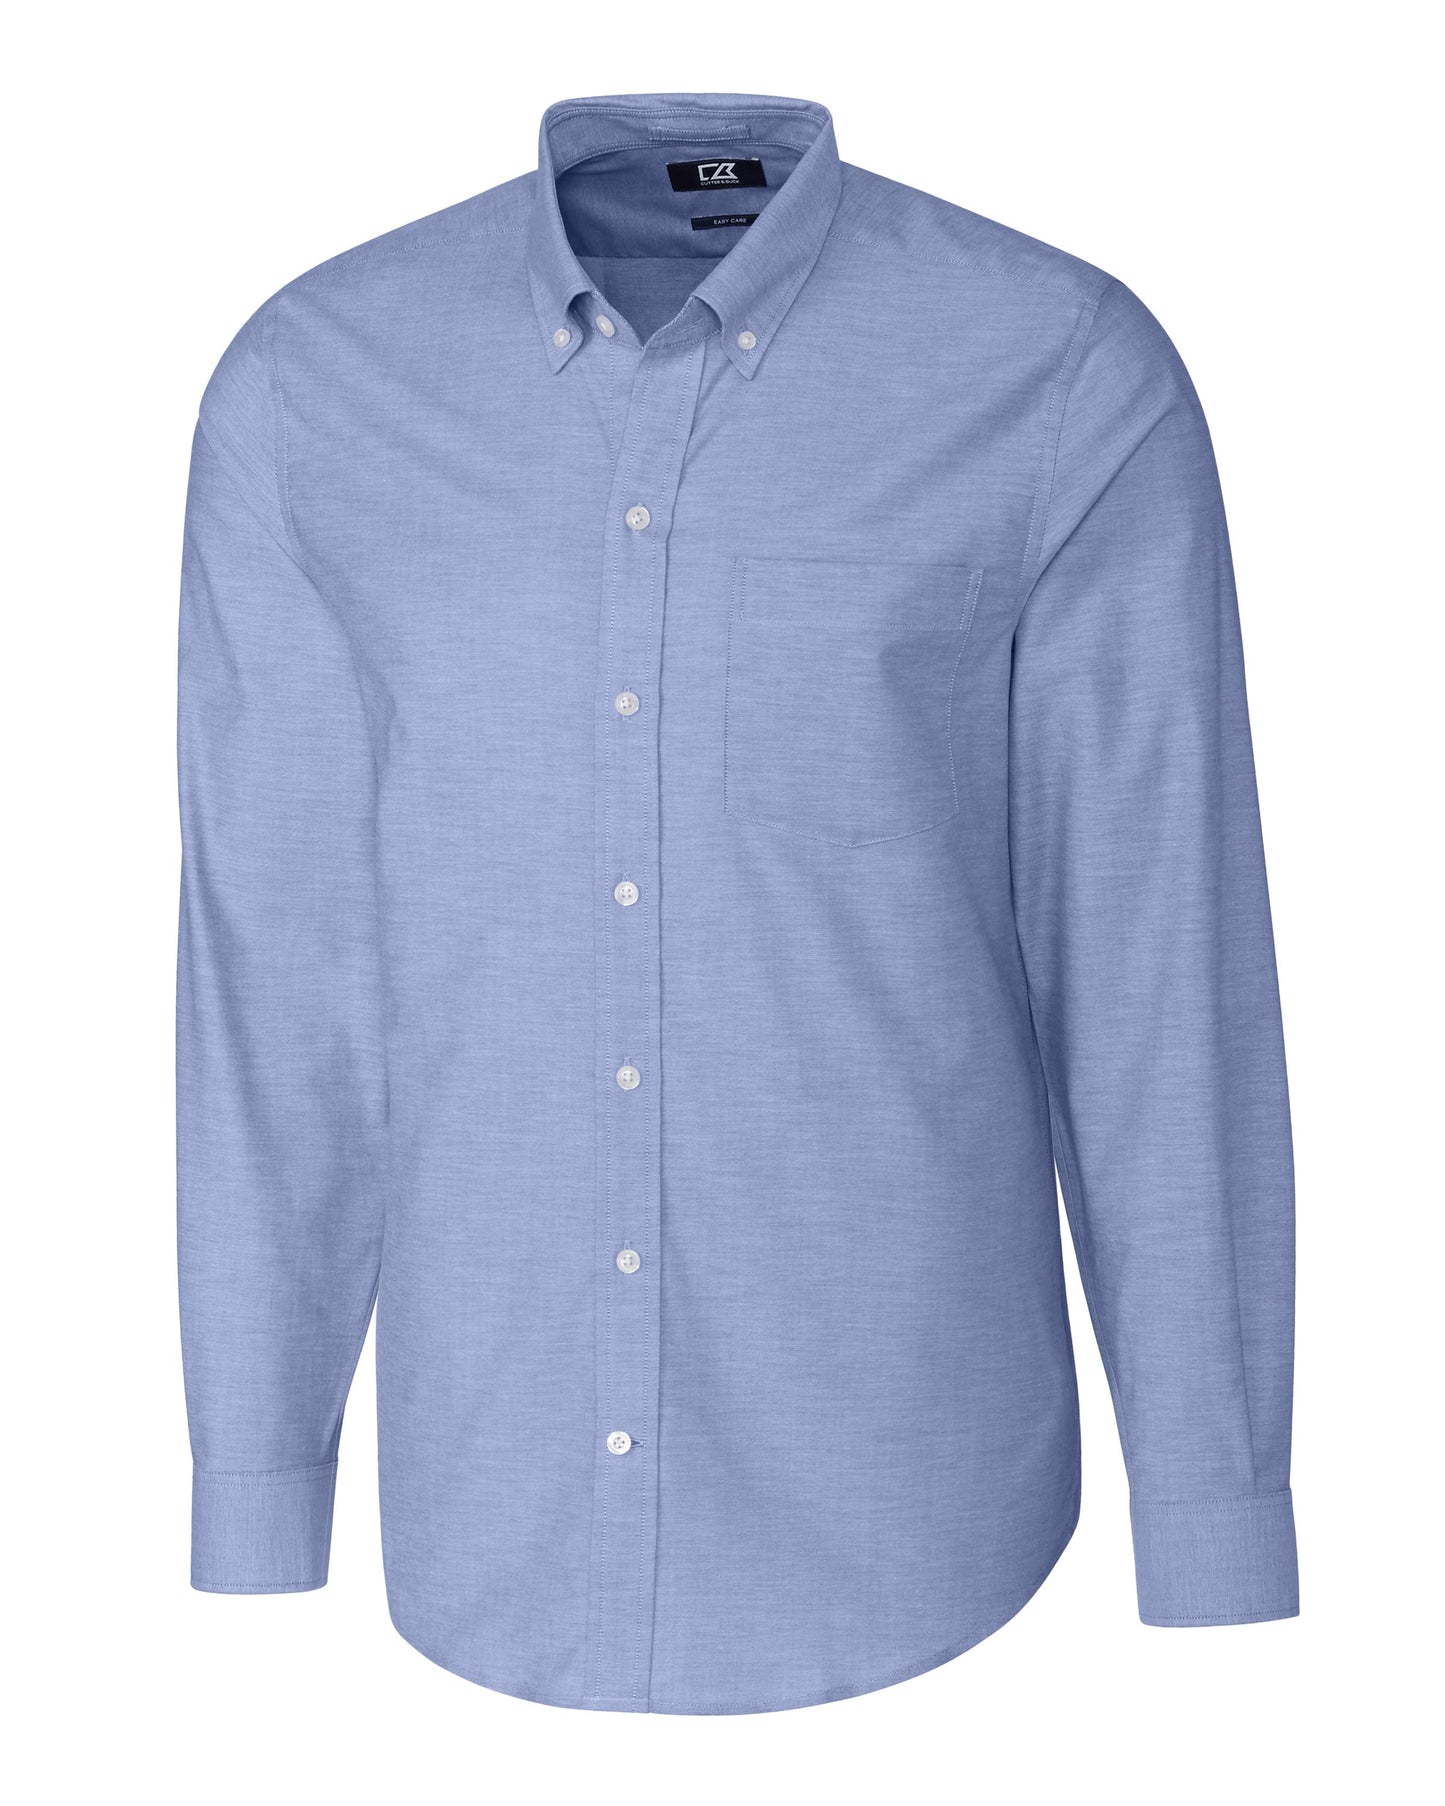 Cutter & Buck Stretch Oxford Dress Shirt French Blue